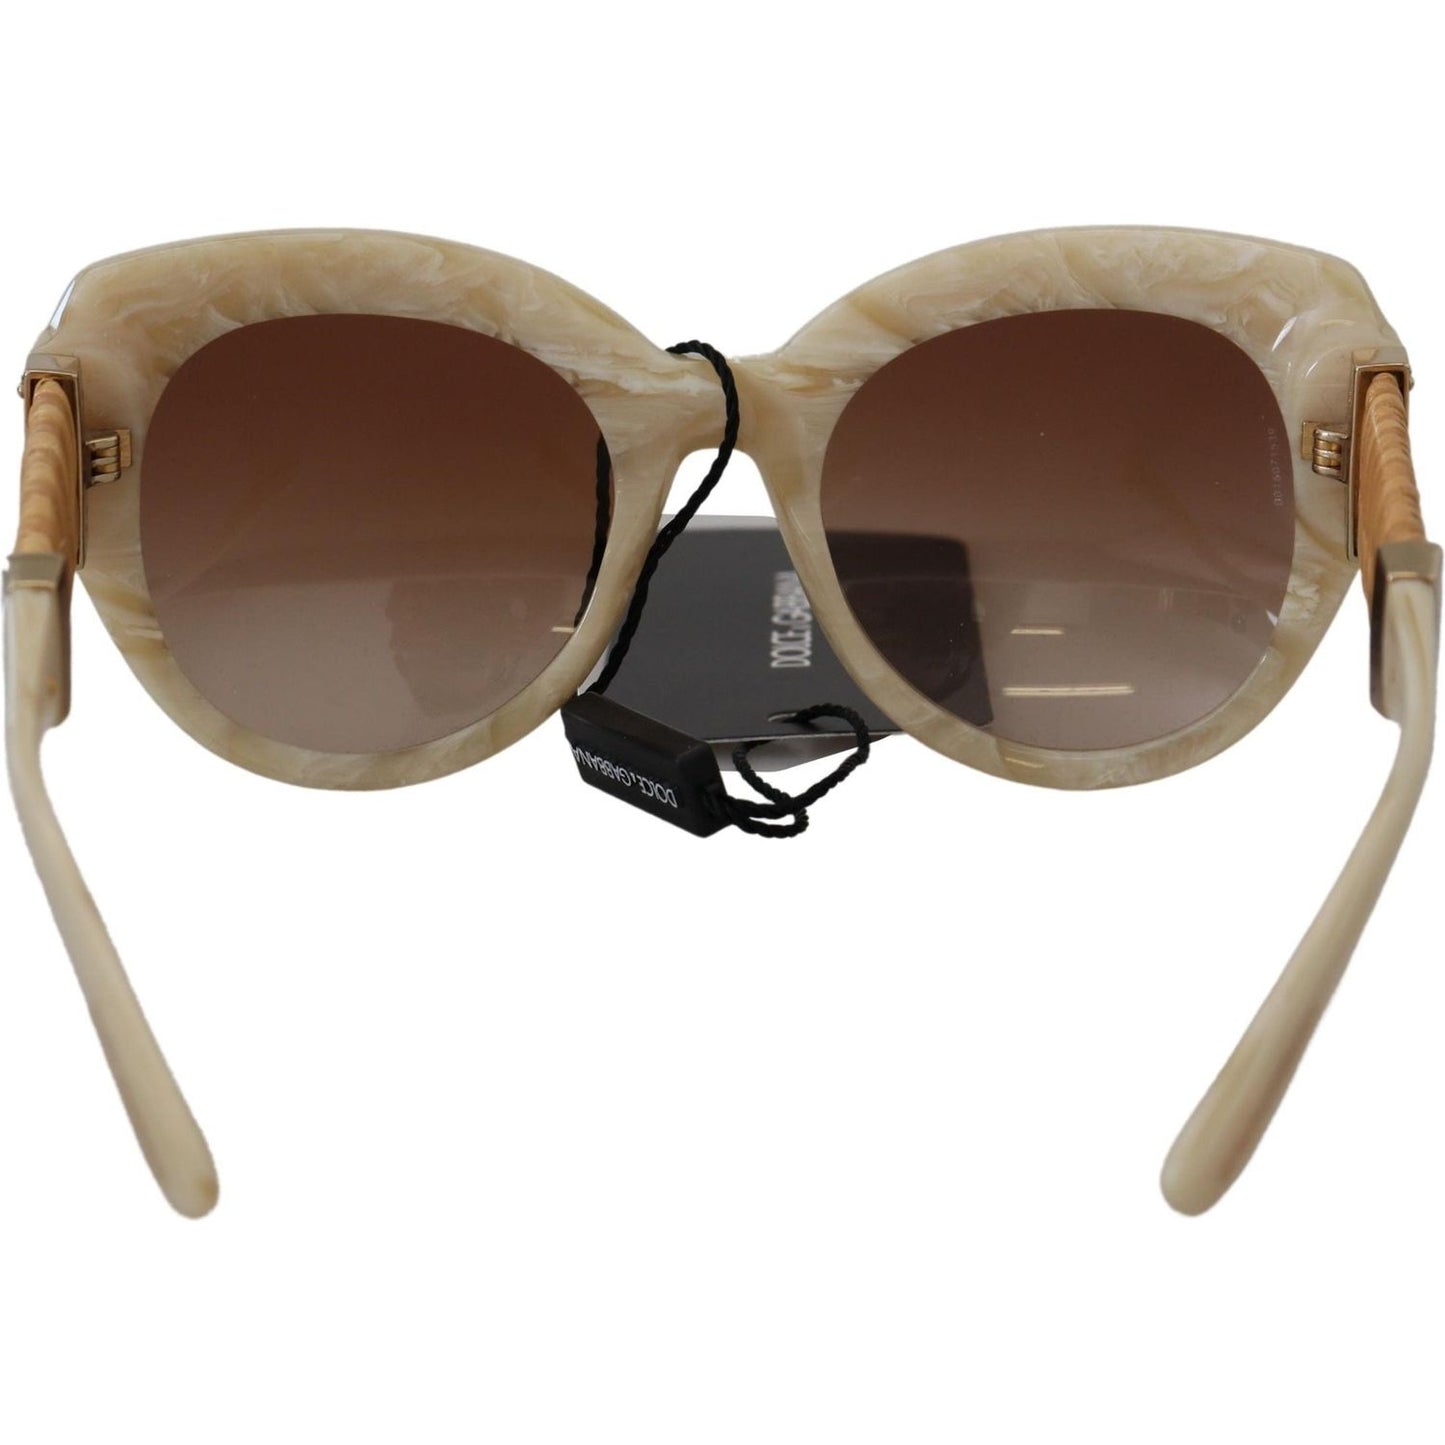 Dolce & Gabbana Beige Chic Acetate Women's Sunglasses beige-acetate-full-rim-brown-lense-dg4294-sunglasses IMG_4311-1-d91acdf2-574.jpg